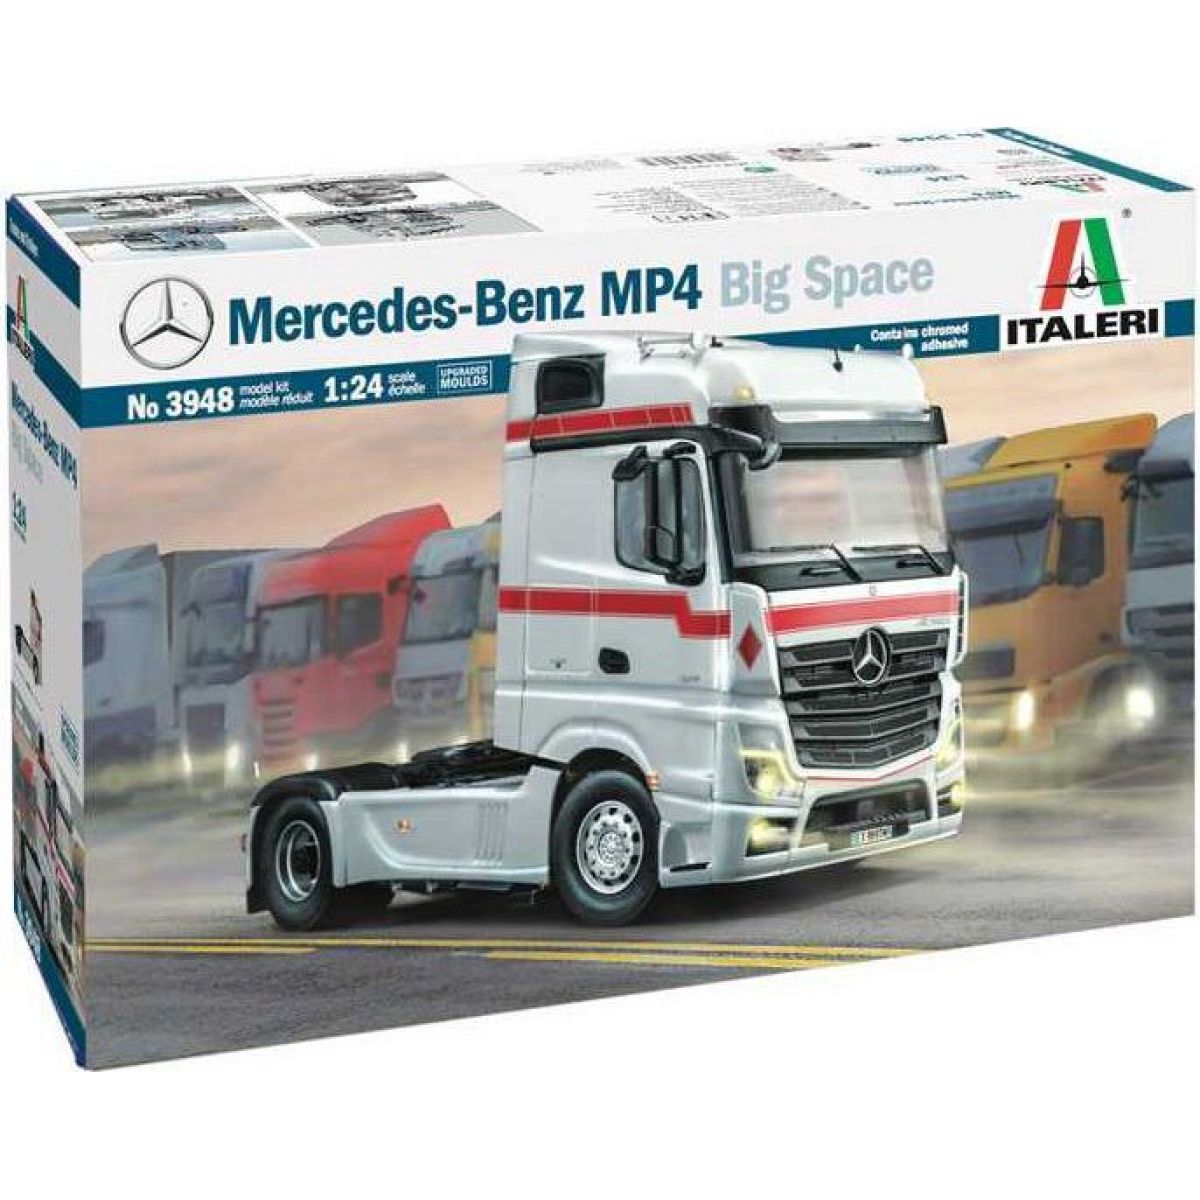 Italeri Model Kit truck 3948 Mercedes-Benz MP4 Big Space 1:24